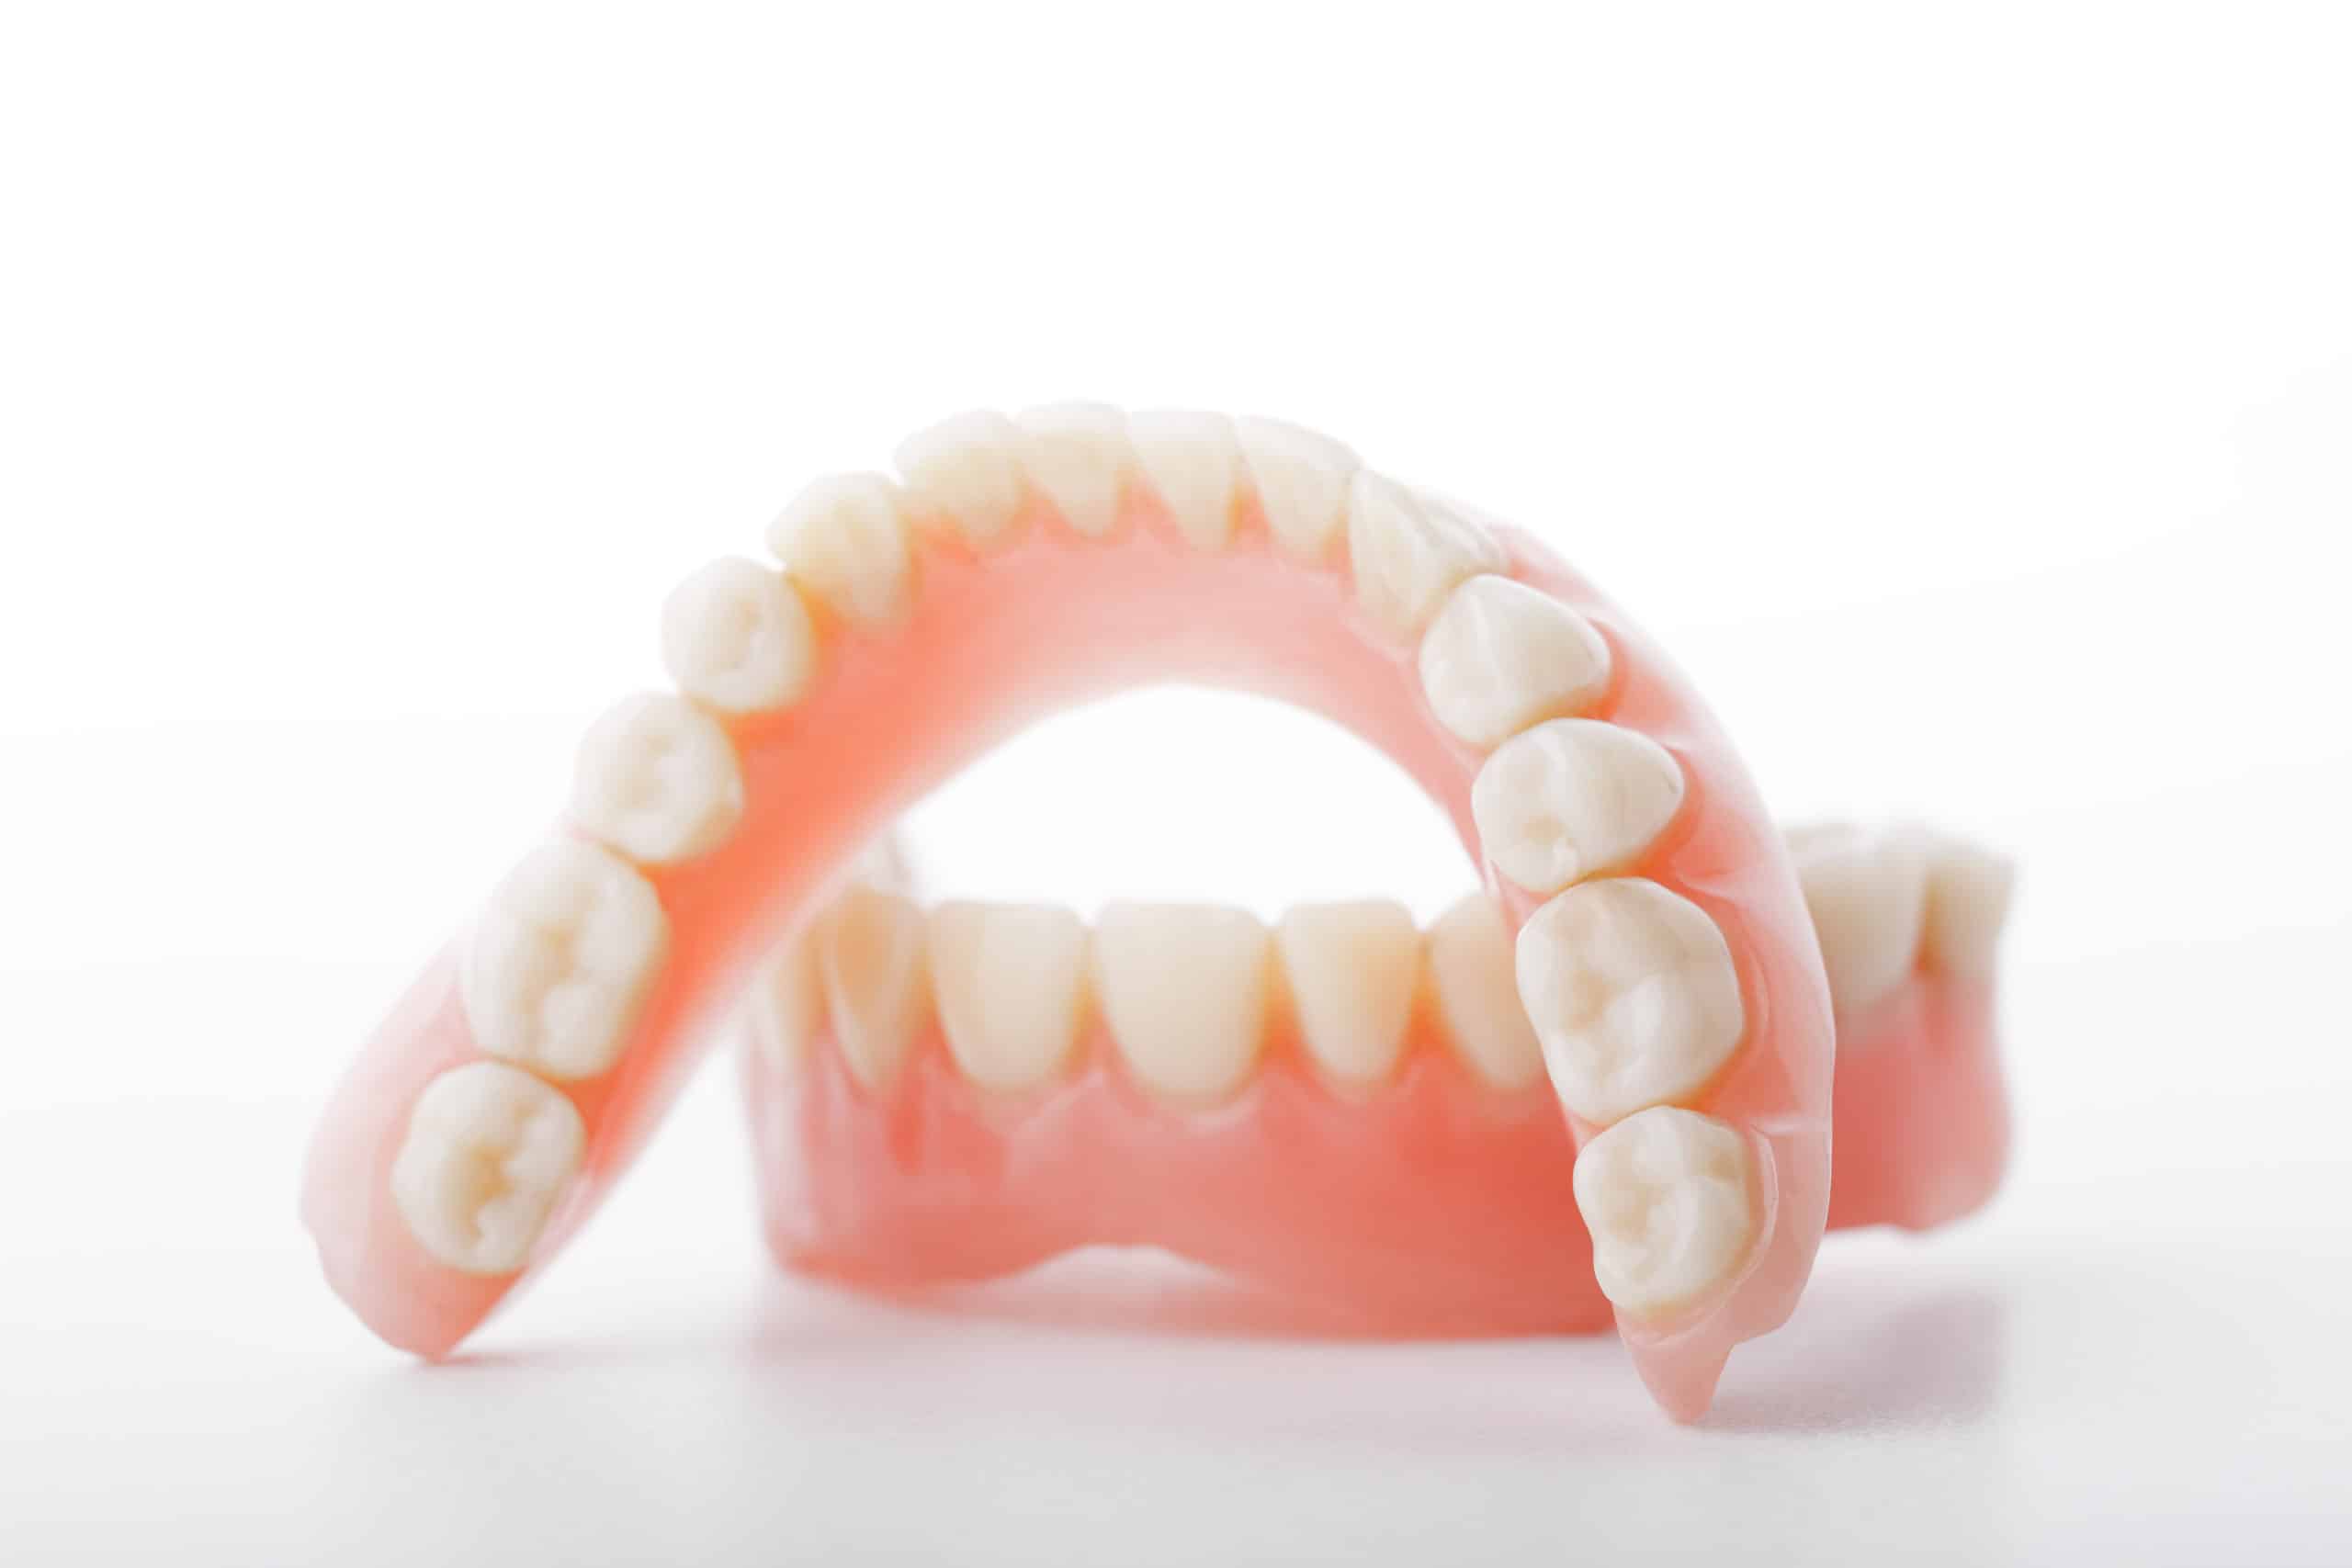 dentures vs dental implants